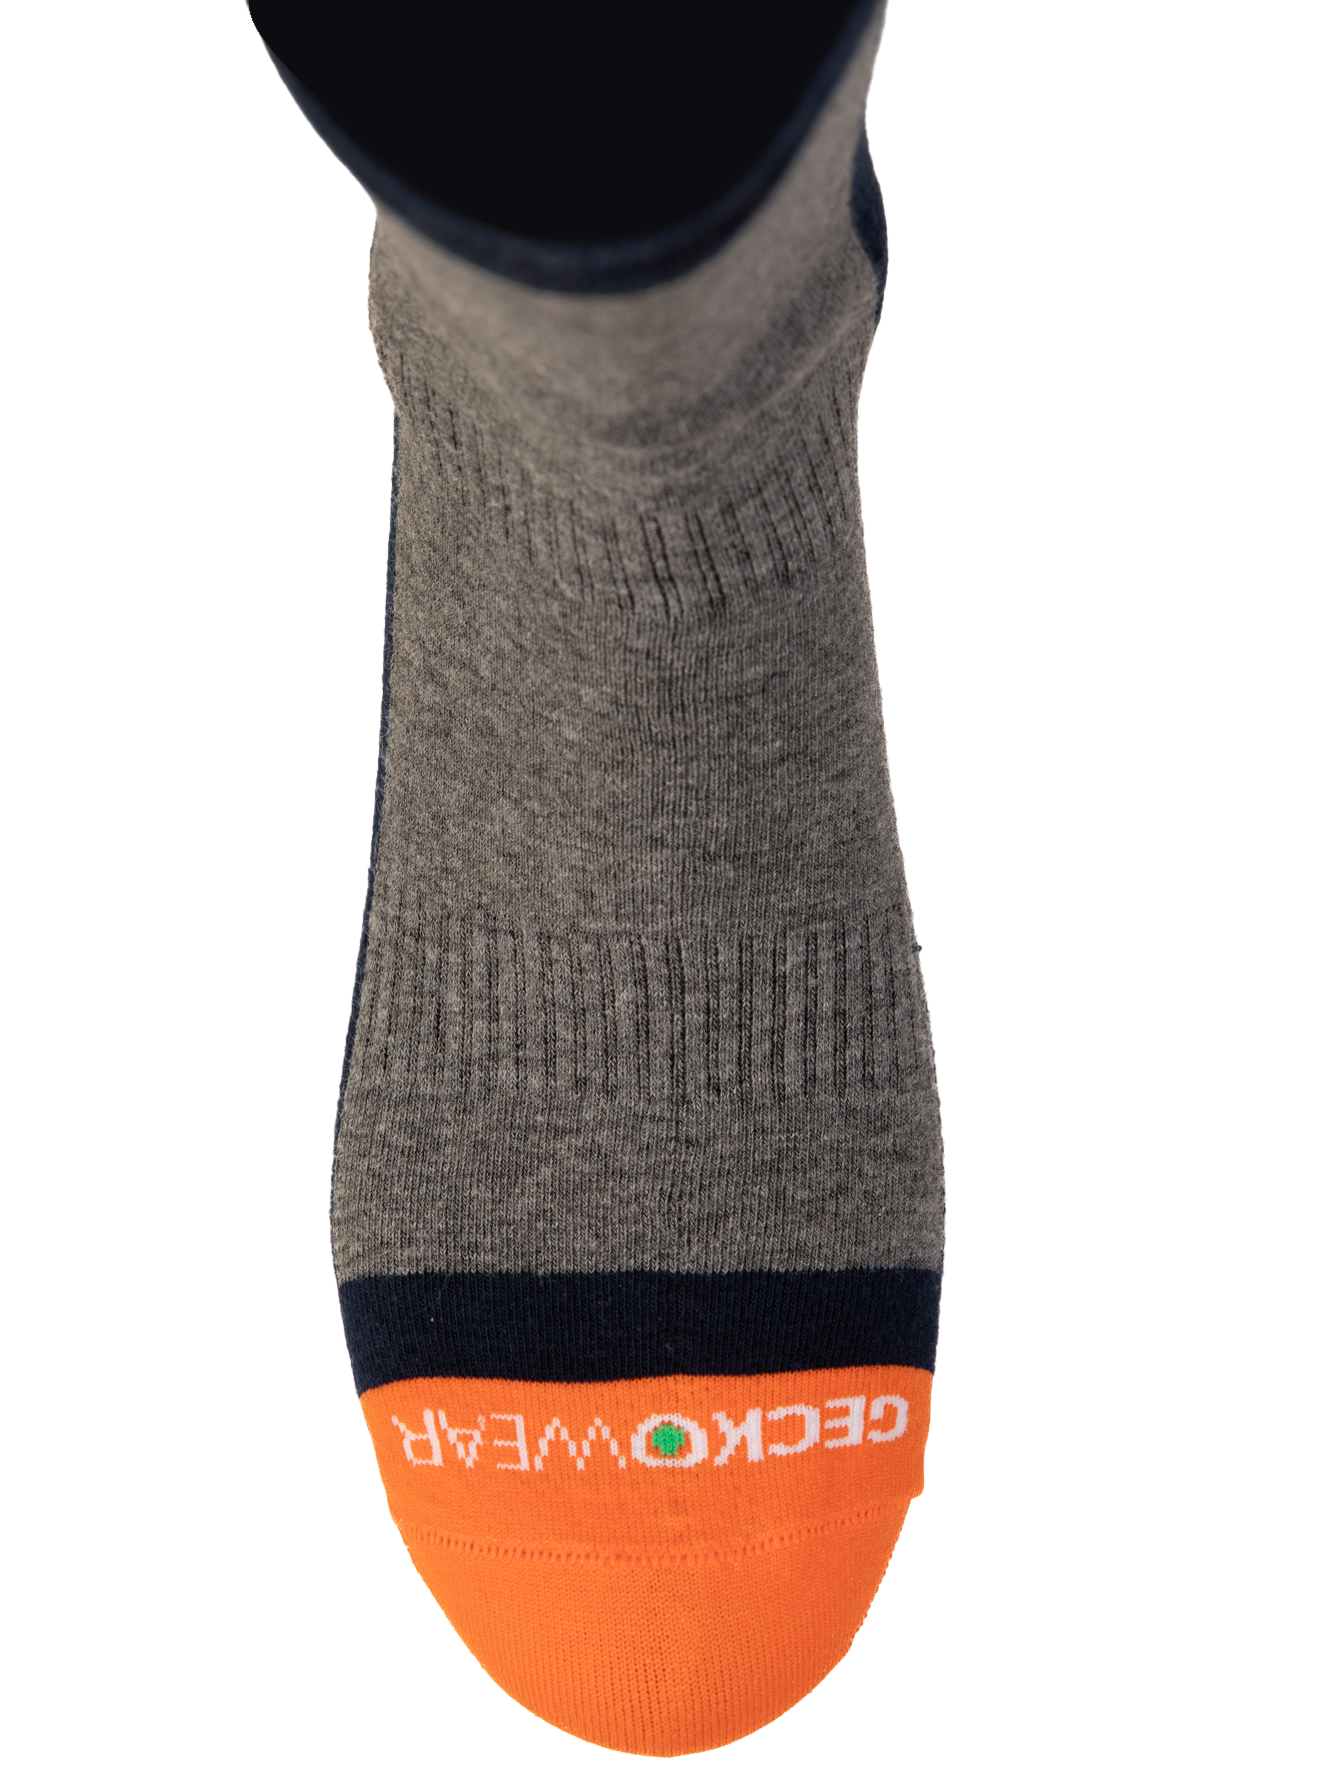 Knee Length Lightweight Waterproof Socks | Lightweight